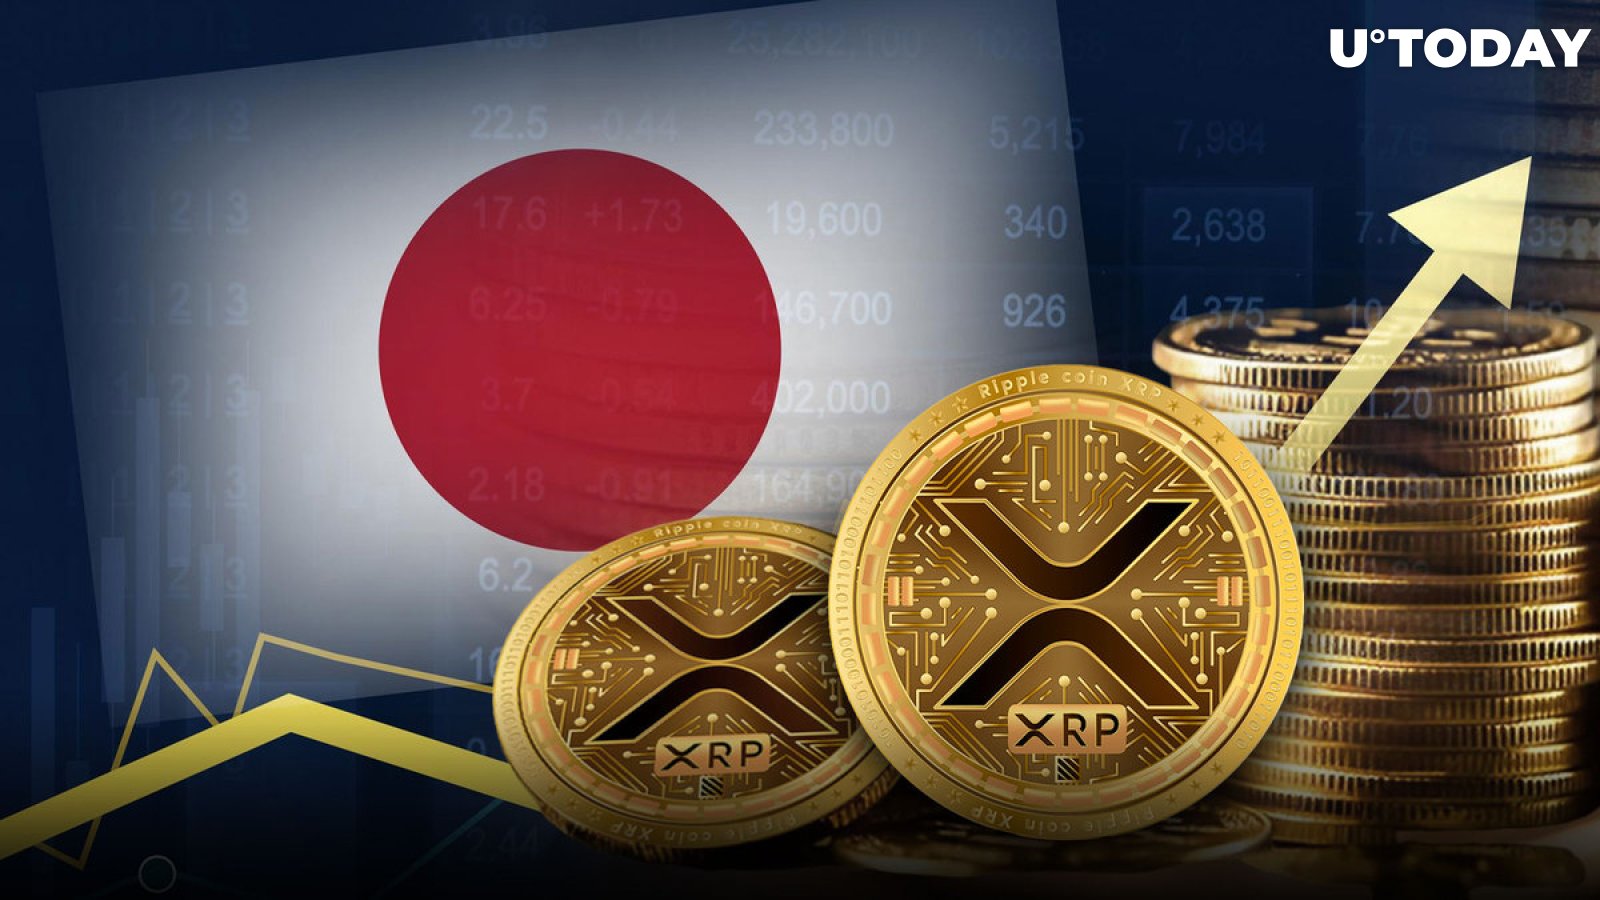 XRP's Main Partner in Japan Highlights XRP Price Progress